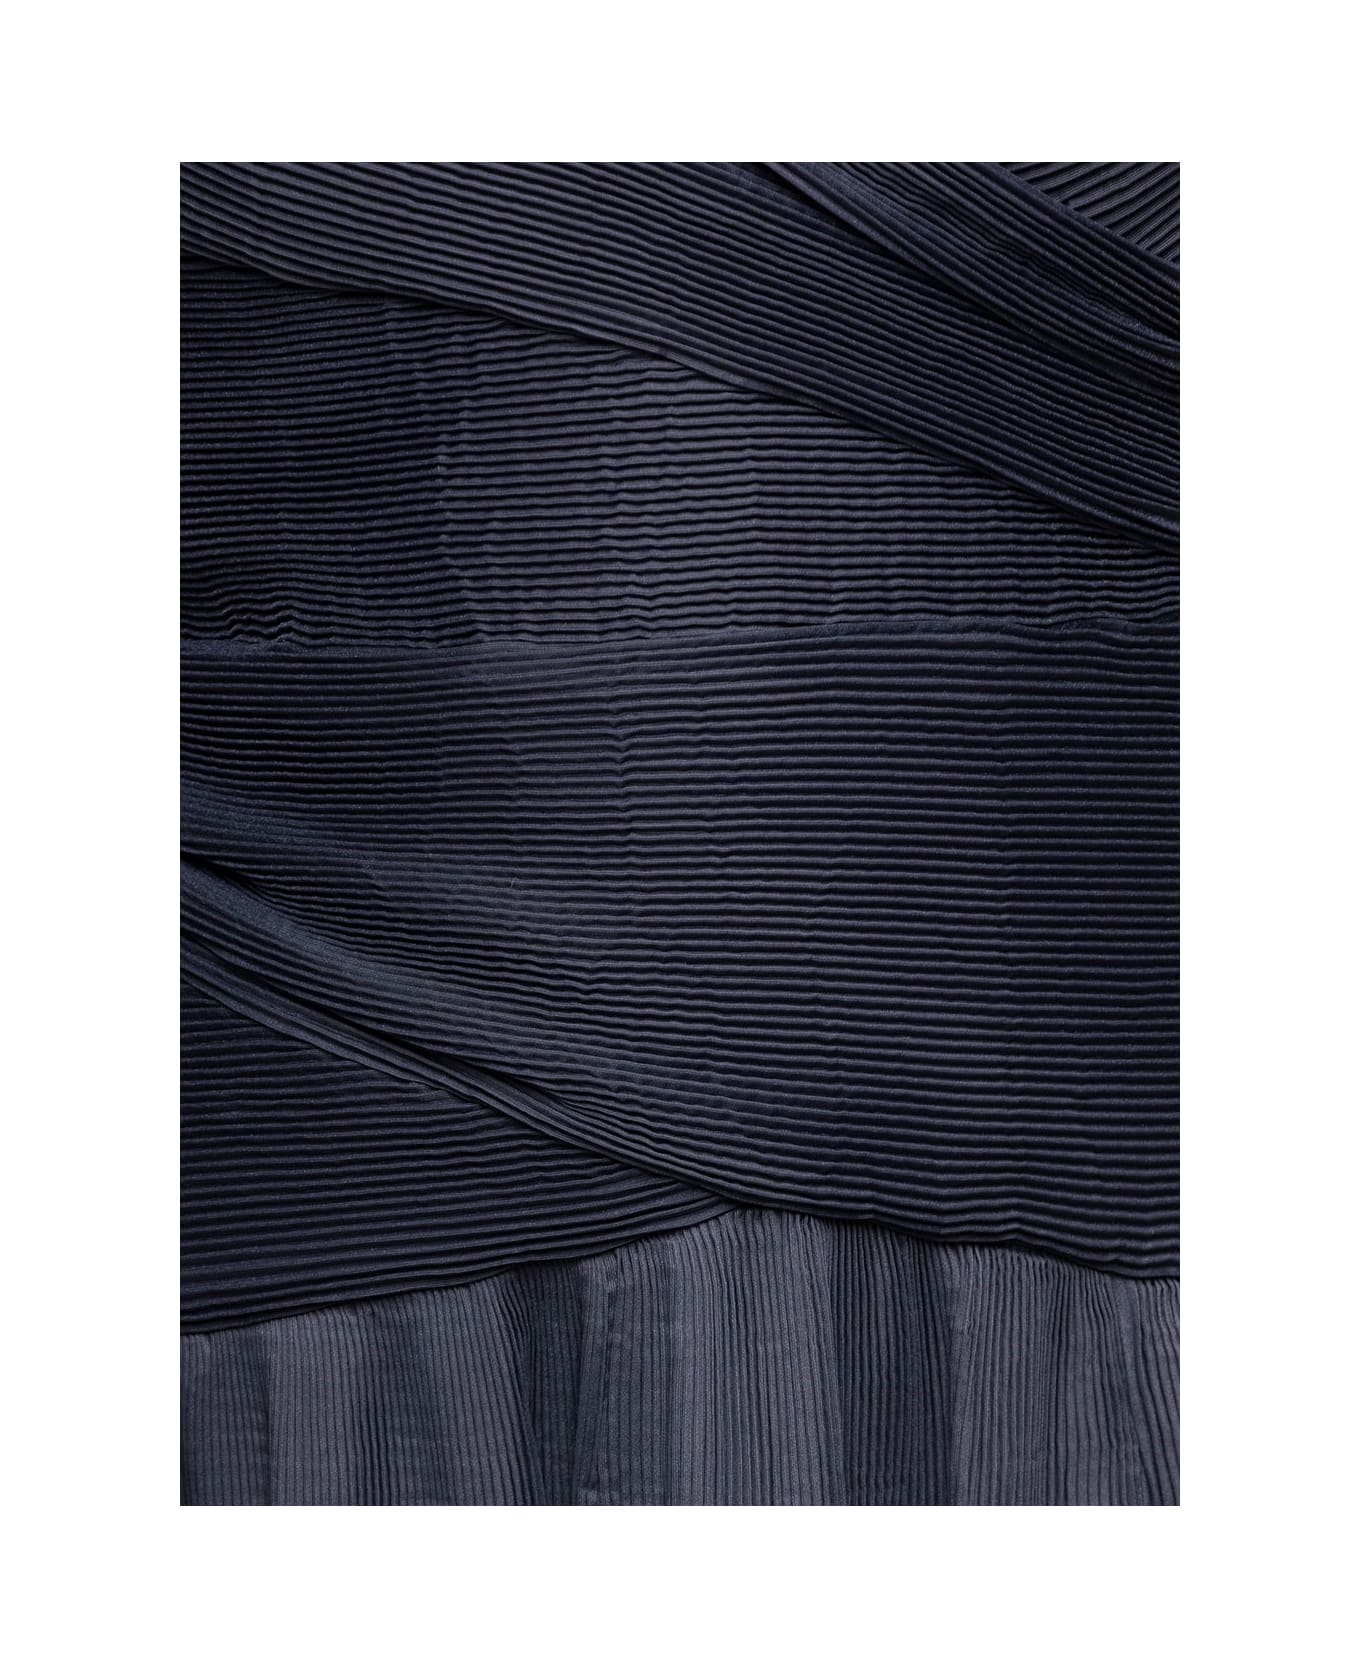 Zimmermann Black Off-shoulder Pleated Midi Dress In Black Chiffon Woman - Blu